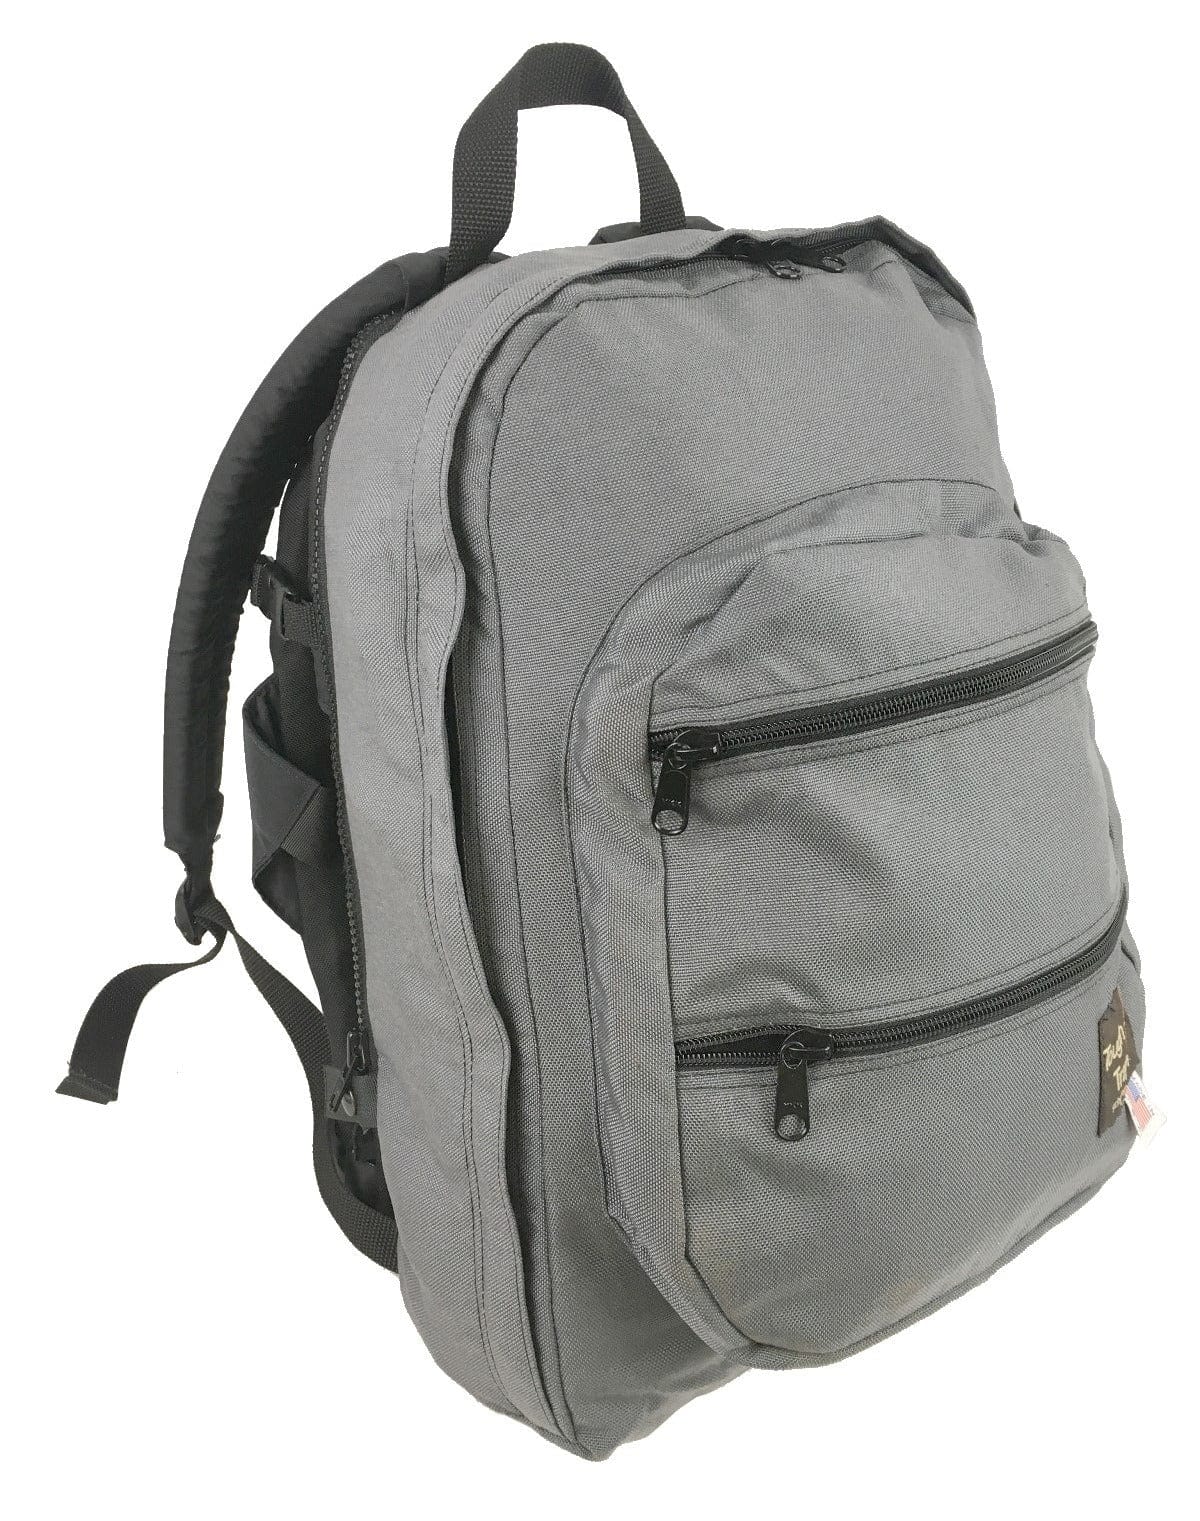 Buy Speedy Bag Organizer / Speedy Bag Insert / Customizable Online in India  